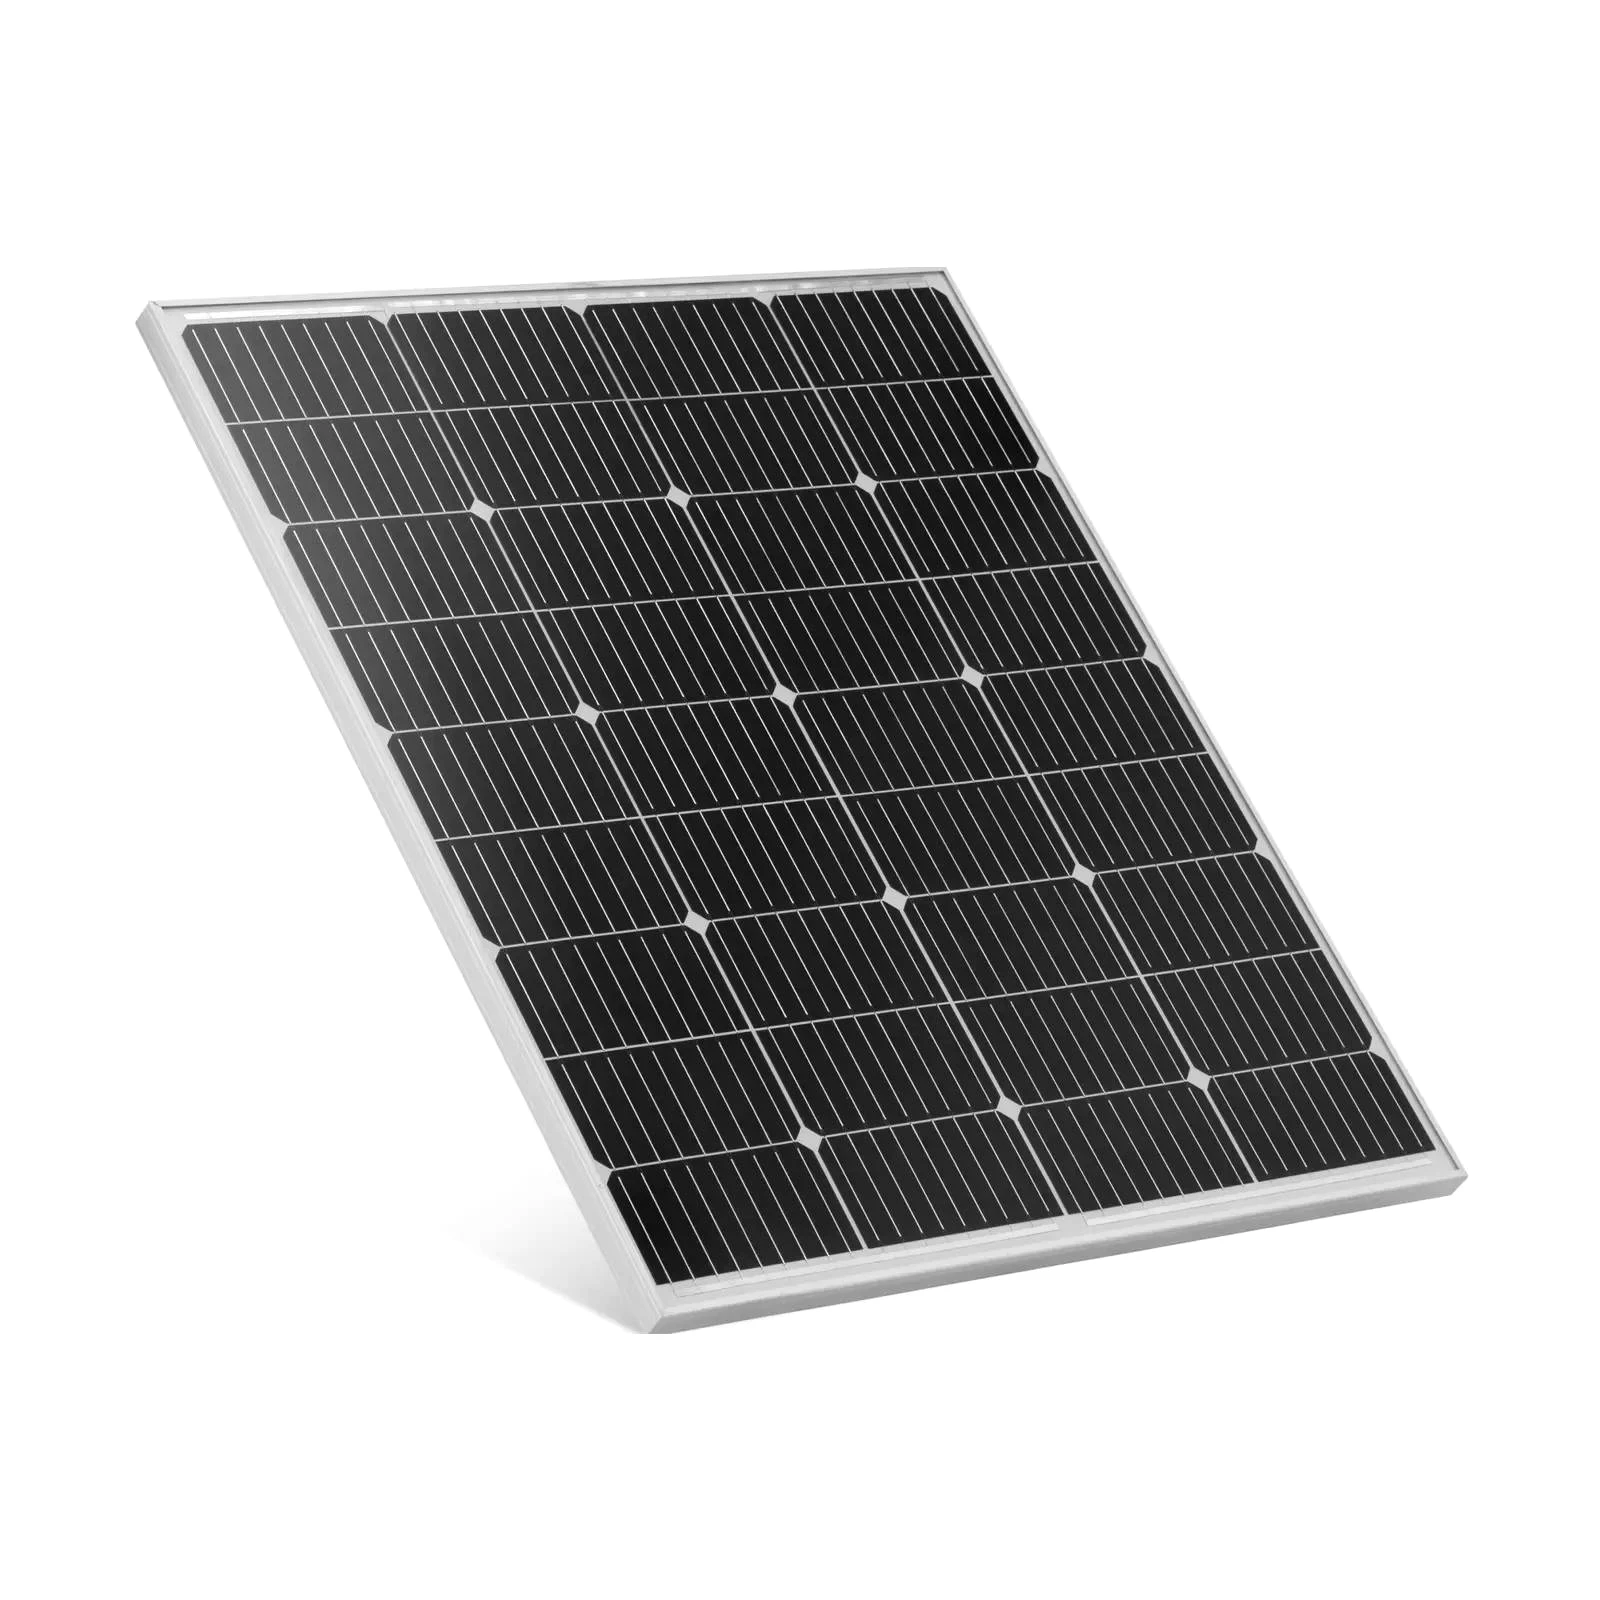 Monkristallines Solarpanel Photovoltaikmodul Bypass-Technologie 100 W / 22.46 V